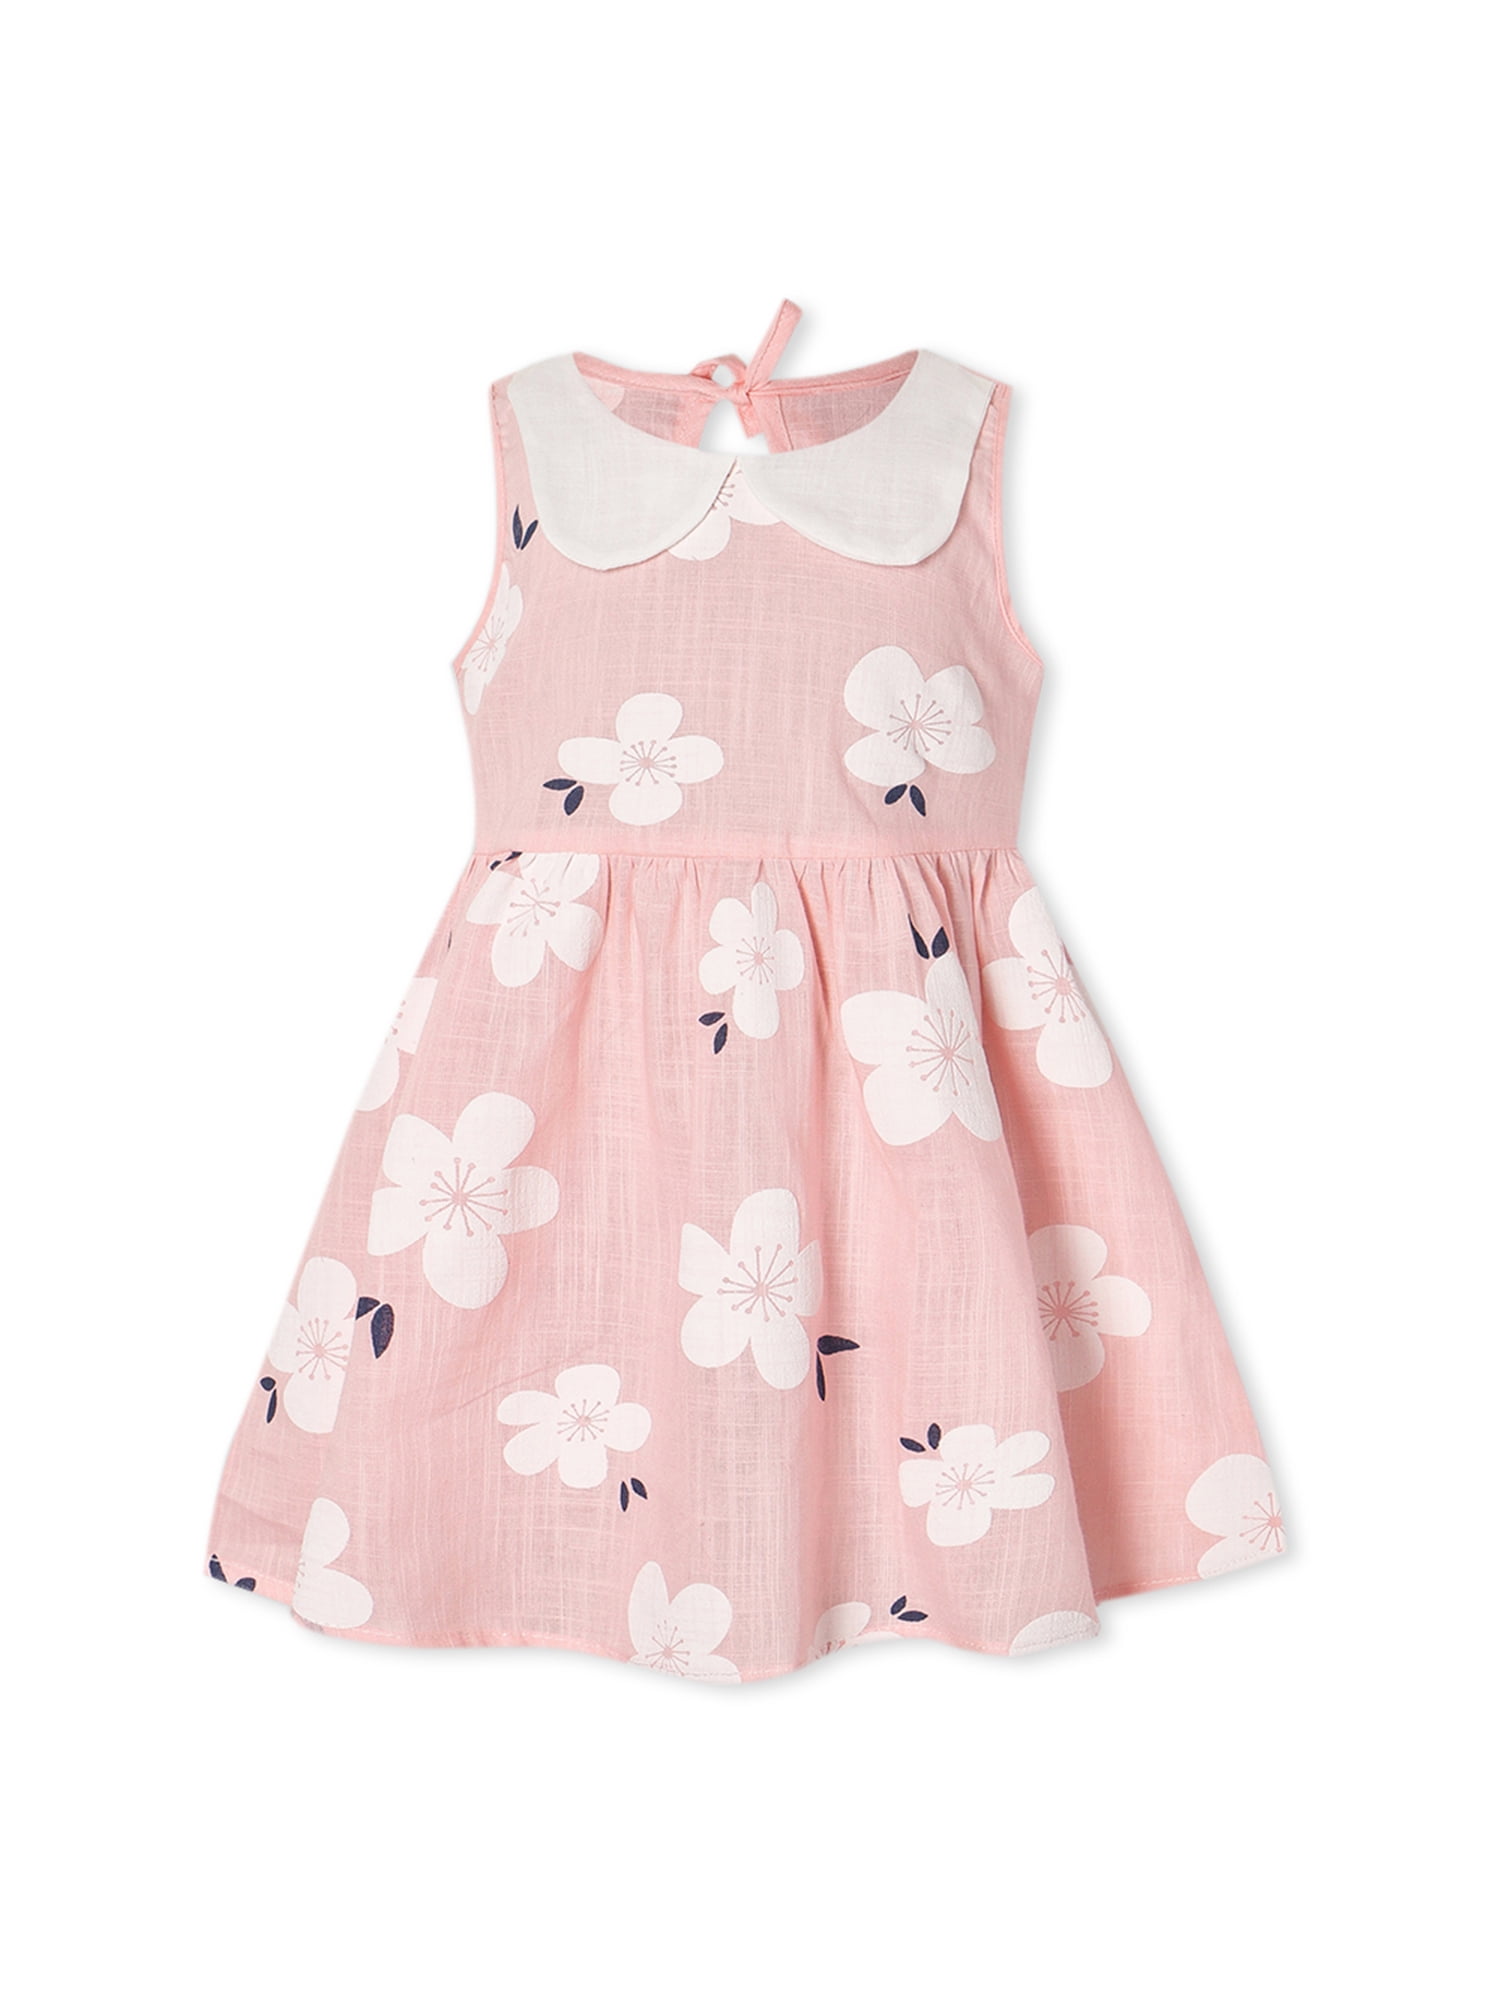 PatPat - PatPat Baby Girl Floral Allover Ruffle Collar Sleeveless Dress